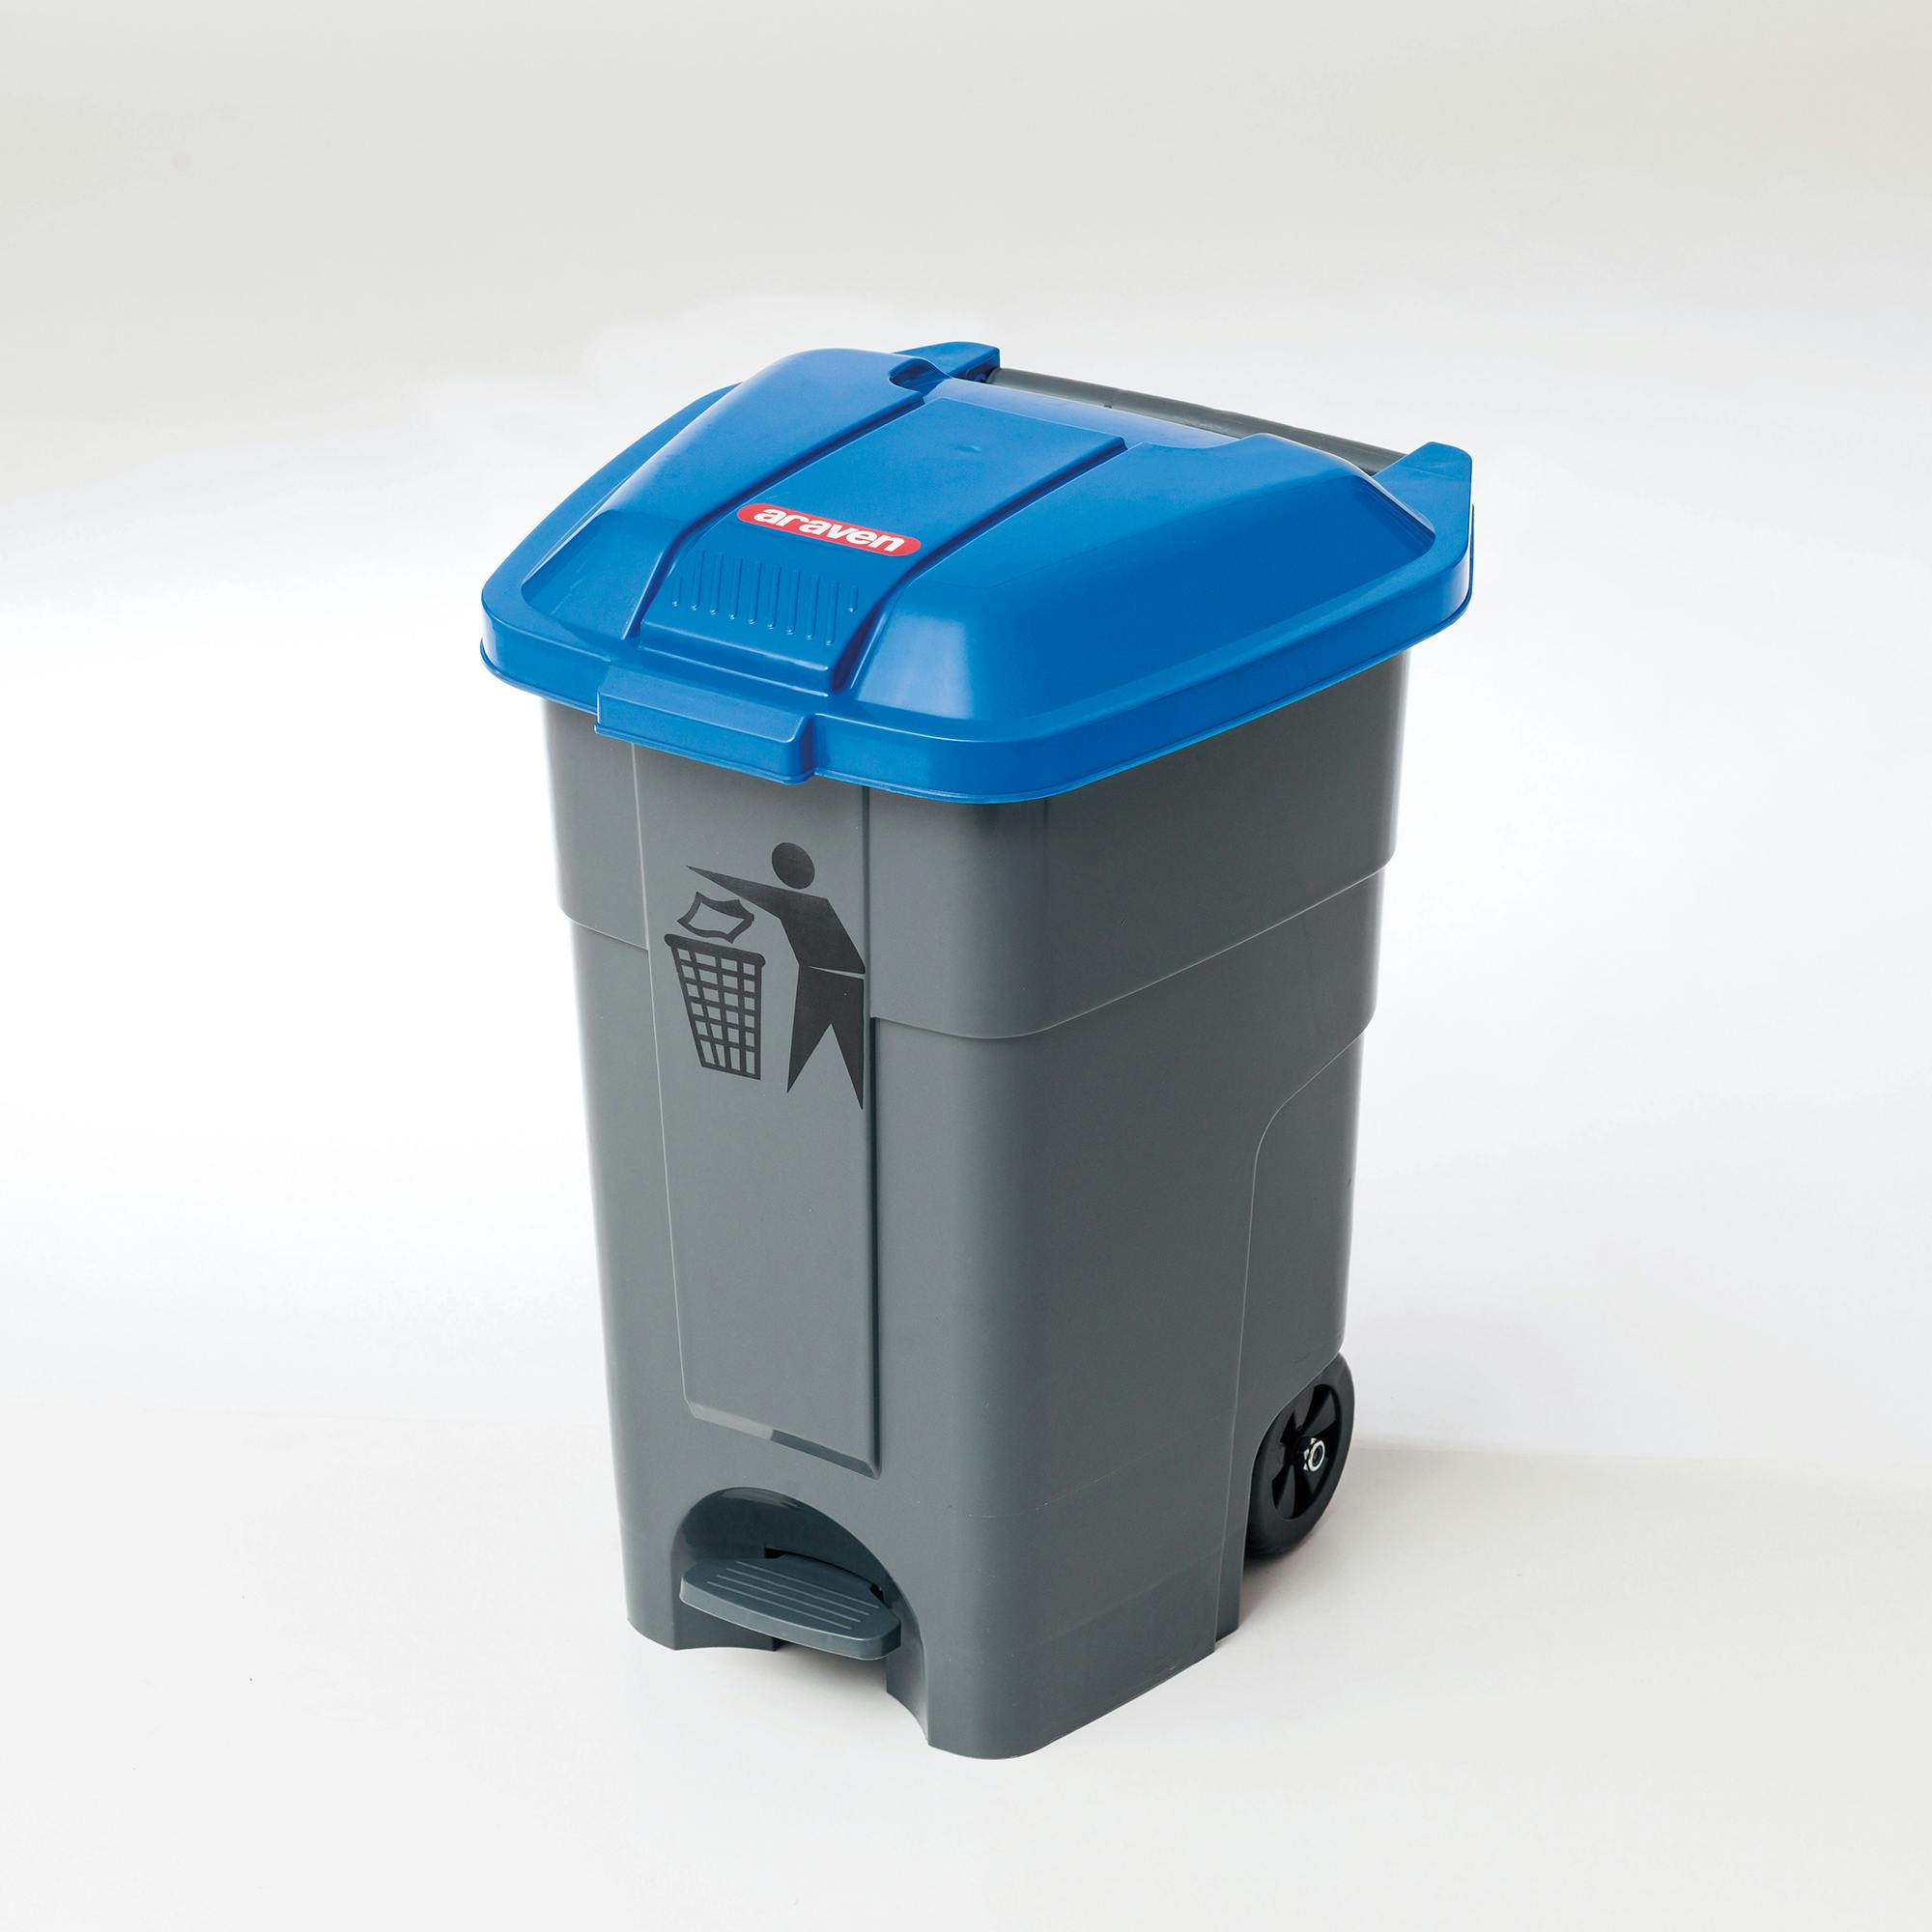 Cubo basura 50 litros de color azul Araven